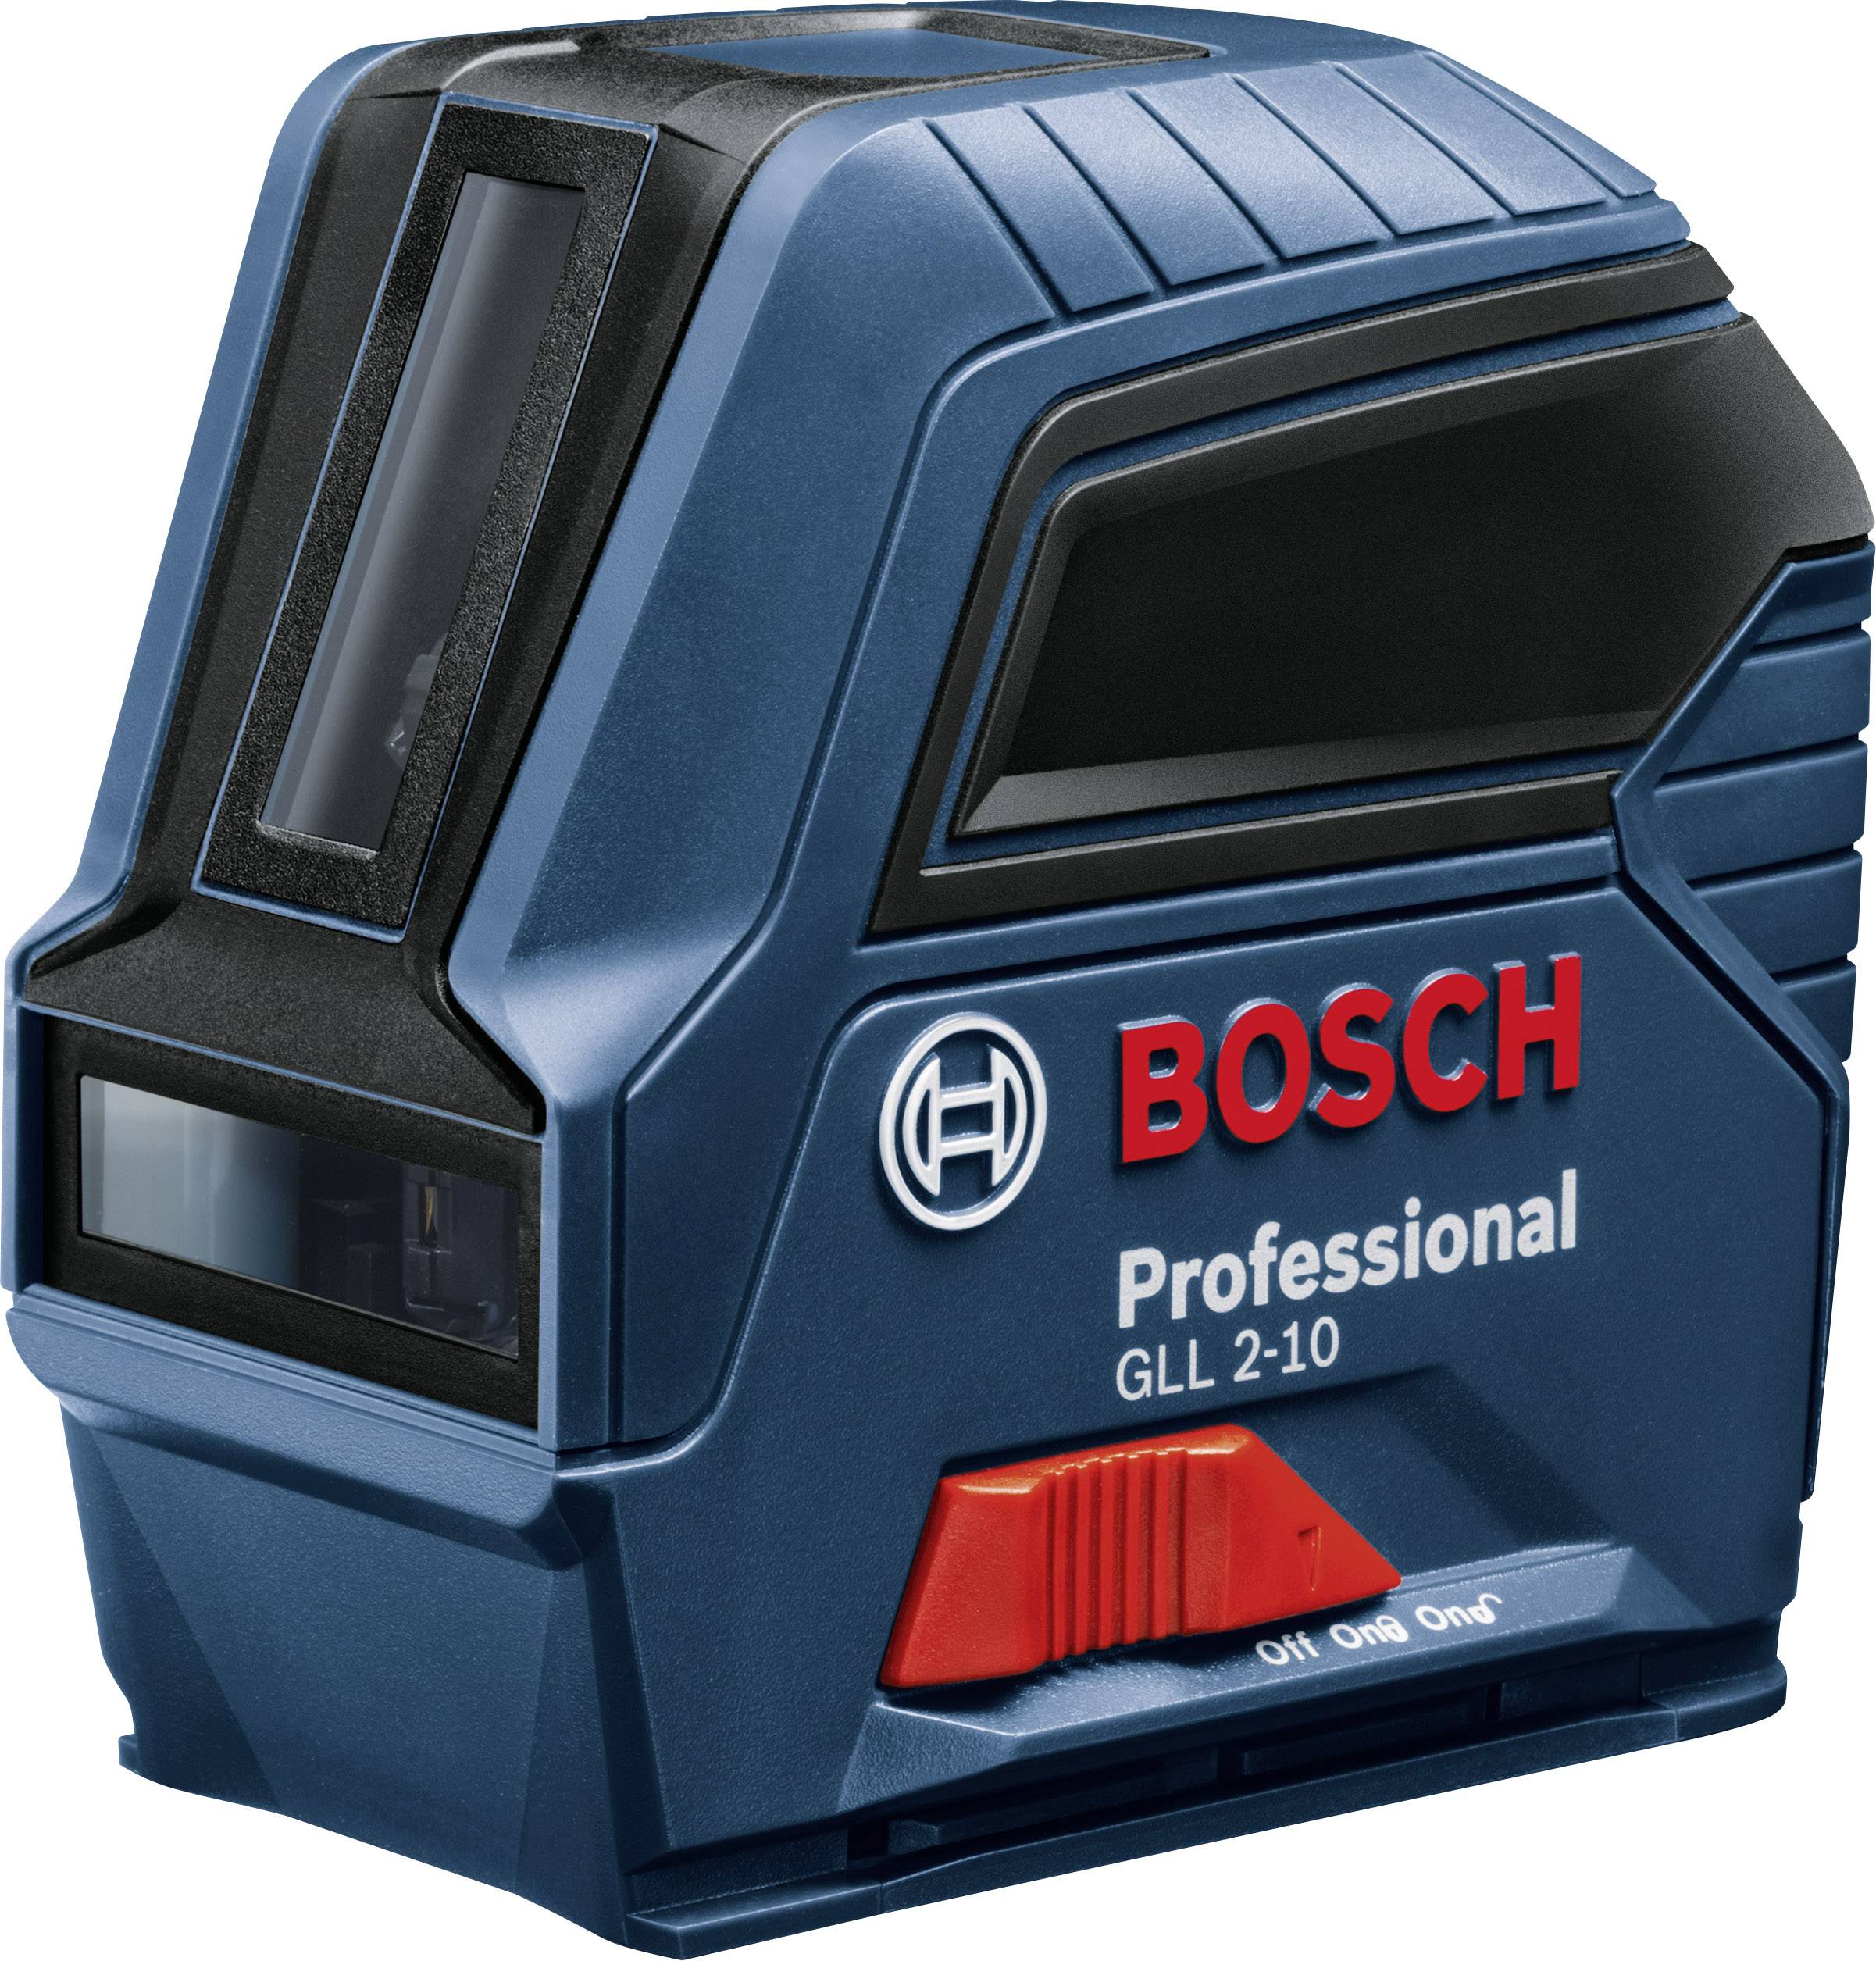 Laser GLL 2 jusqu'à 10m Bosch - Mr Bricolage : Bricoler, Décorer, Aménager,  Jardiner